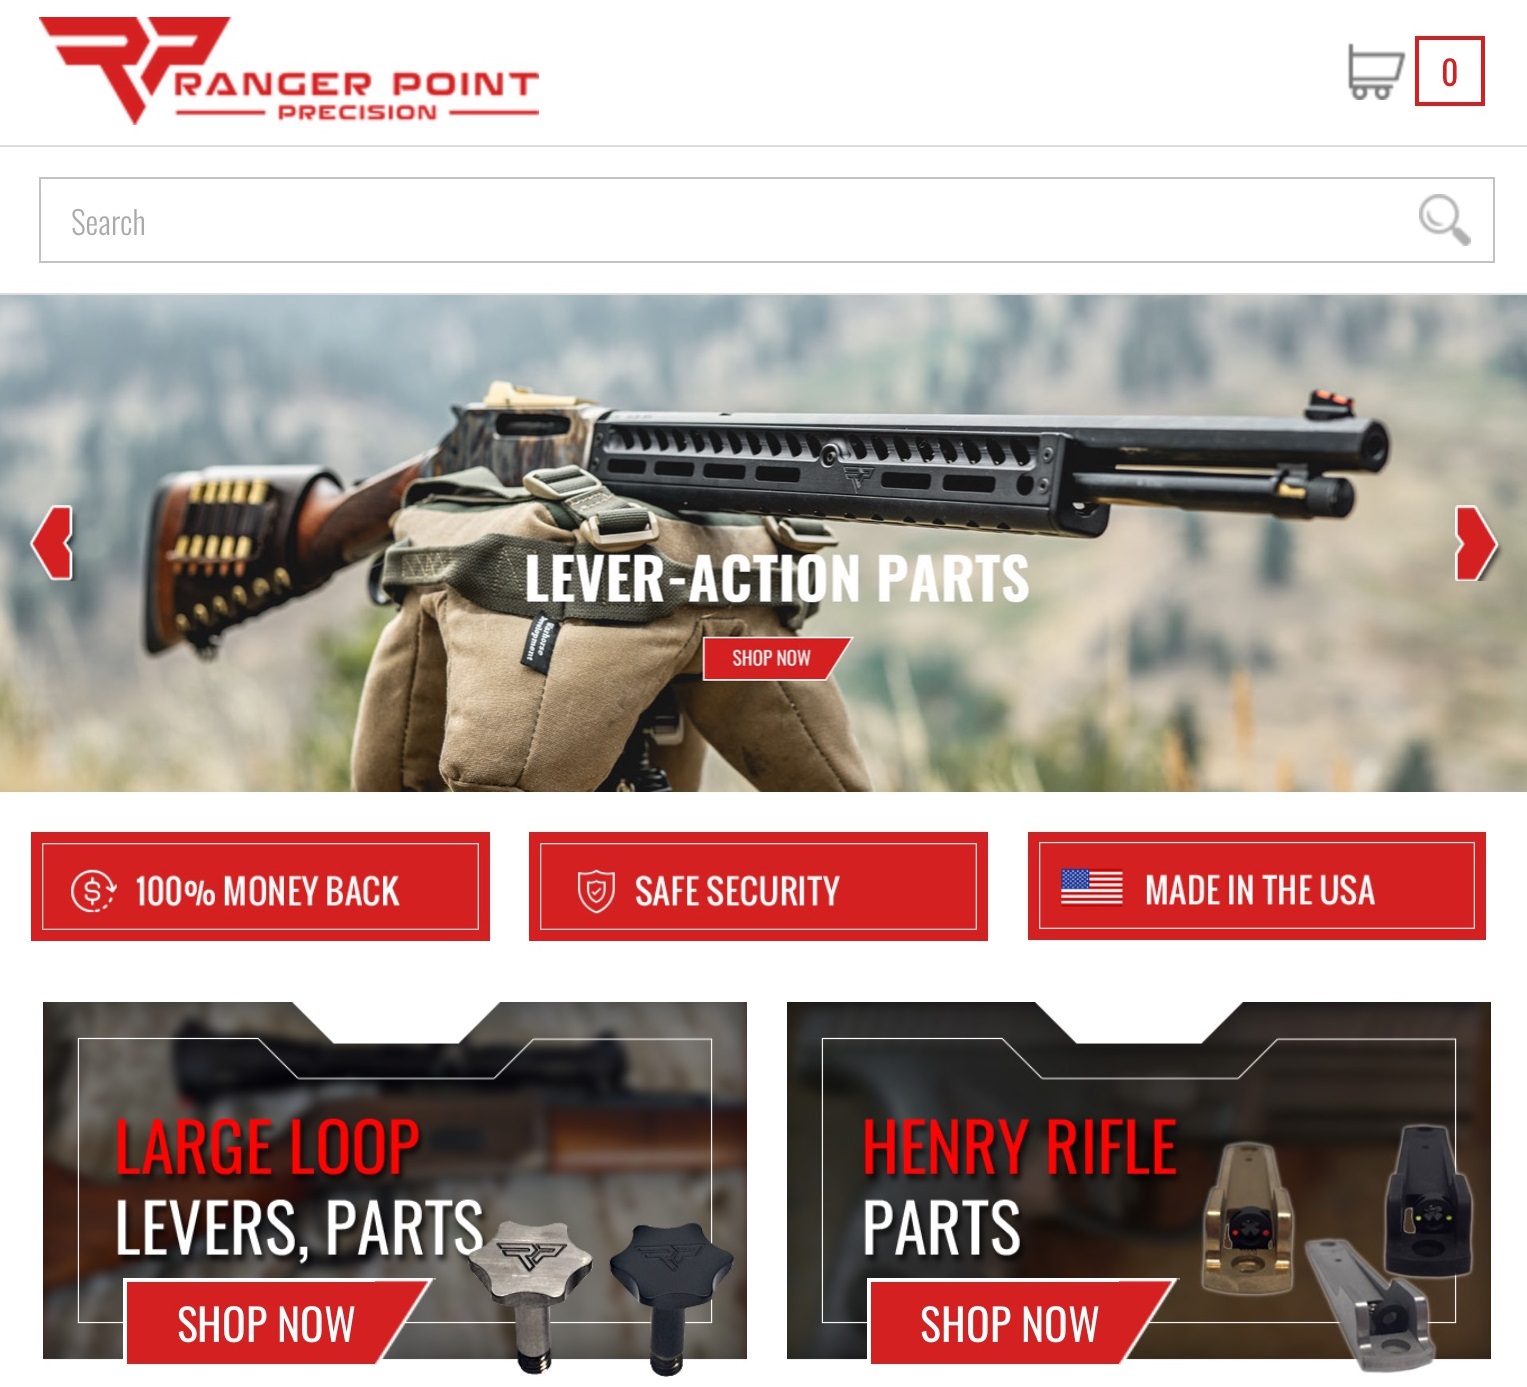 The Ranger Point Precision Website